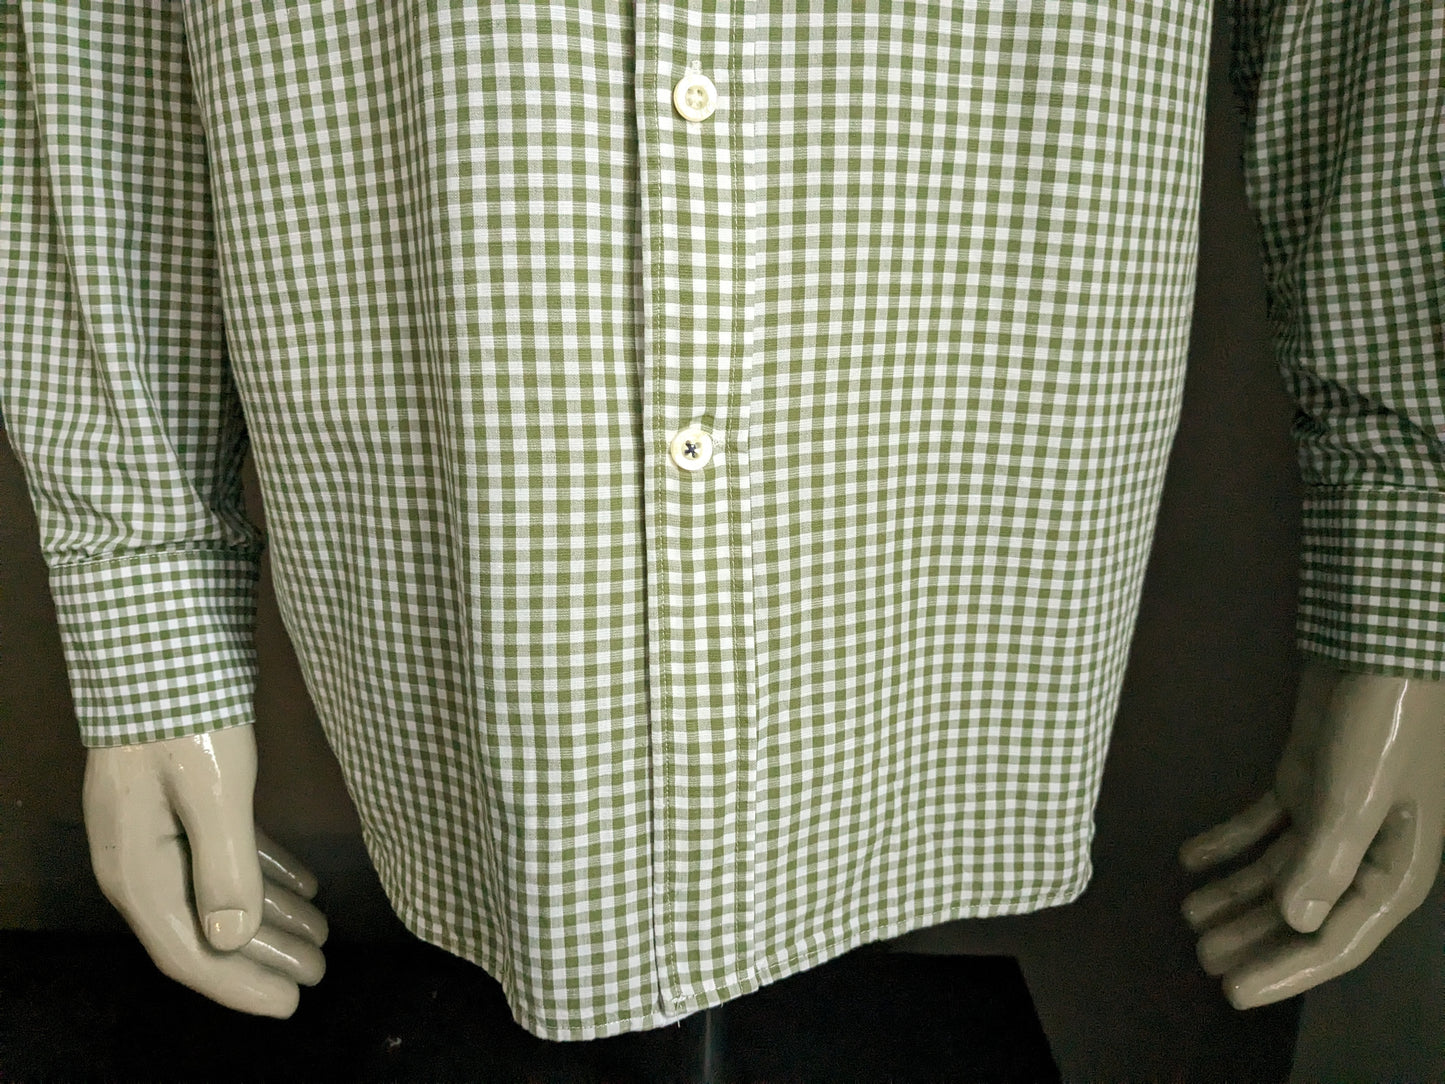 Cricket & Co shirt. Green white checkered. Size XL.